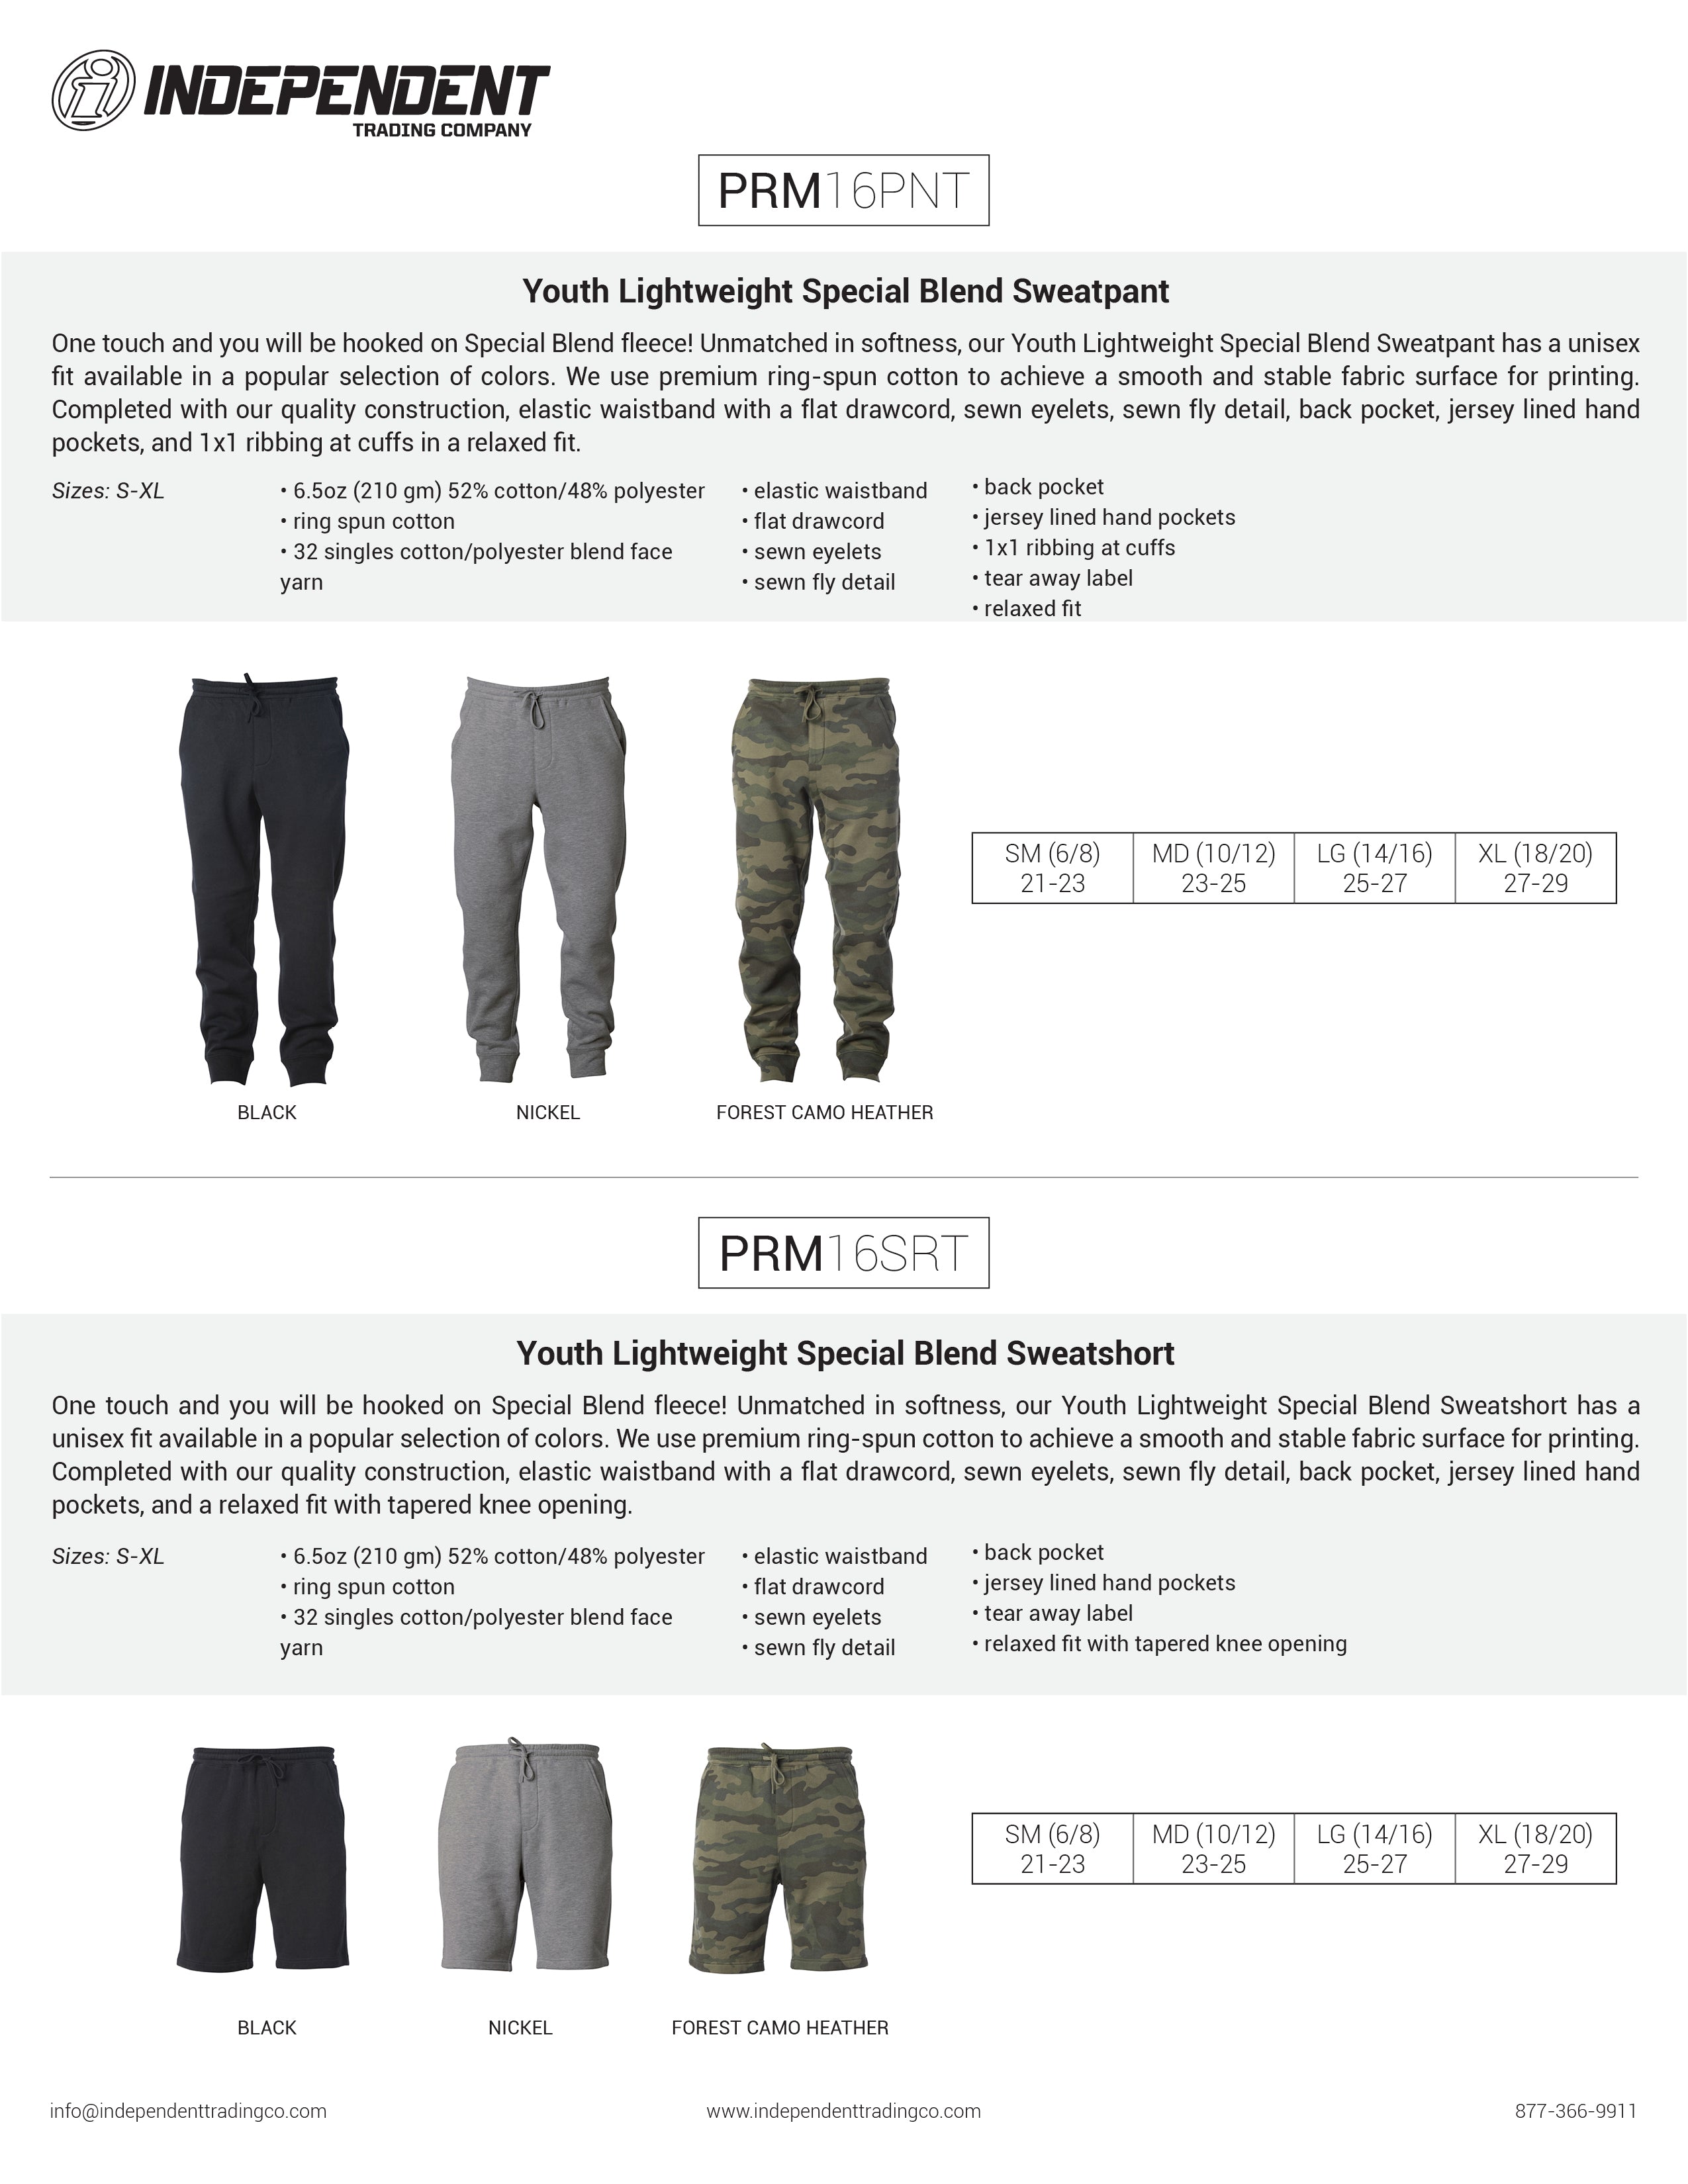 PRM16PNT + PRM16SRT Youth Lightweight Special Blend Sweatpant & Sweatshort